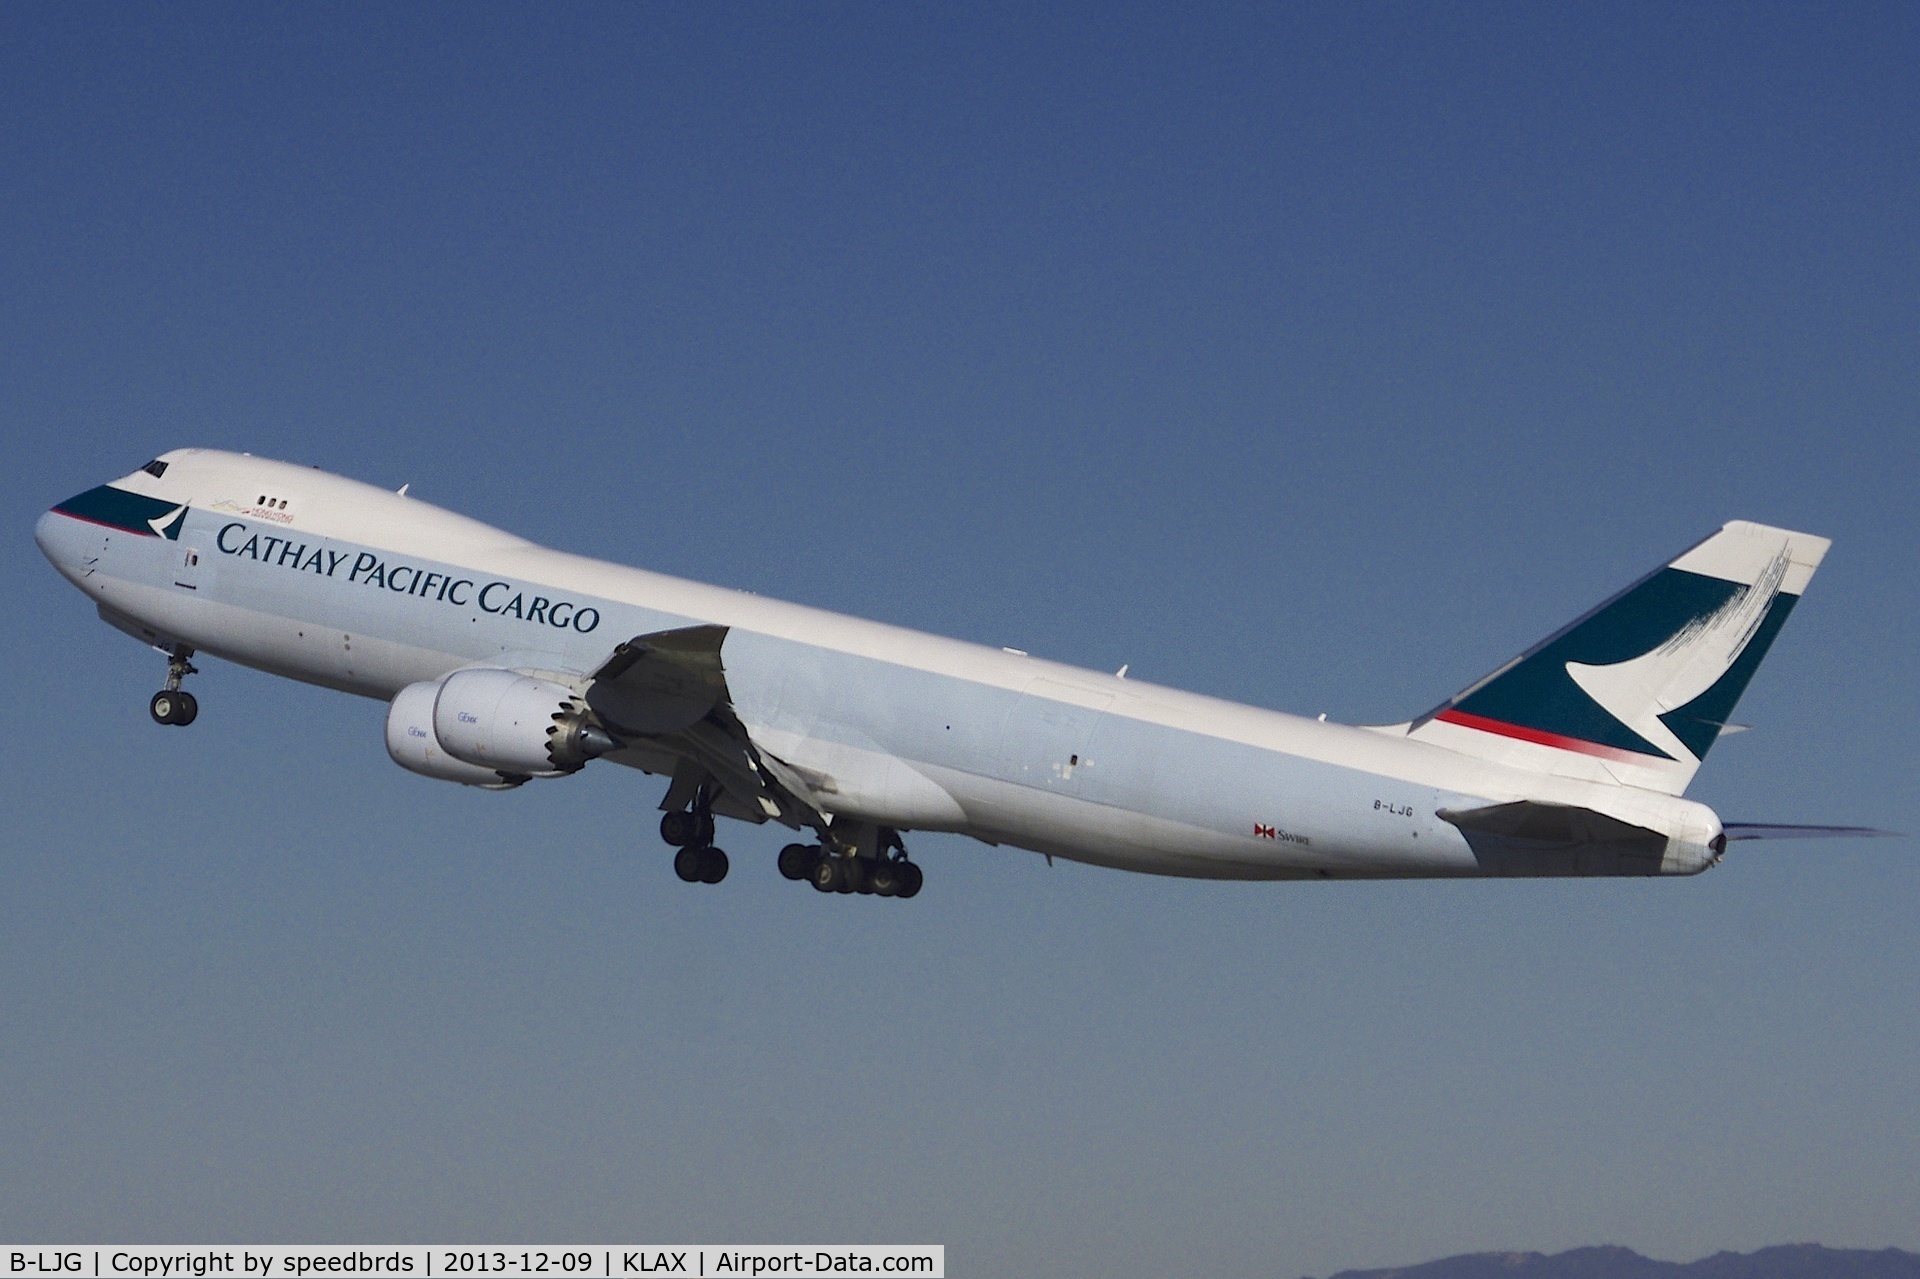 B-LJG, 2012 Boeing 747-867F C/N 39244, Cathay Pacific Cargo 747-8F